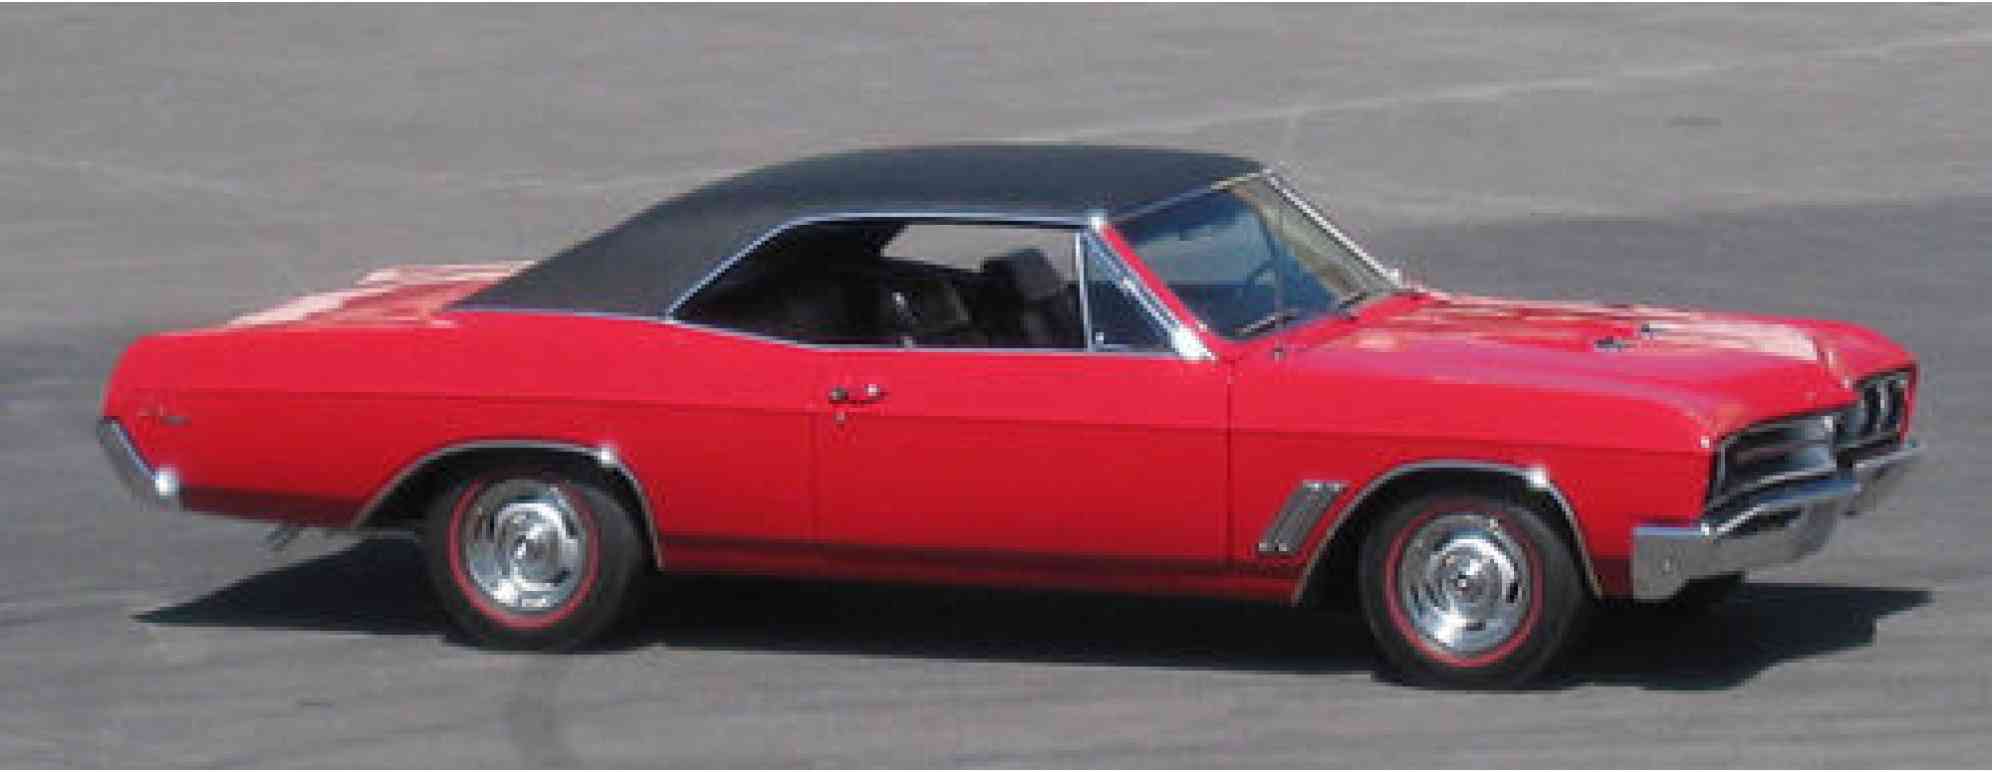 1967 Buick GS 400 Deluxe